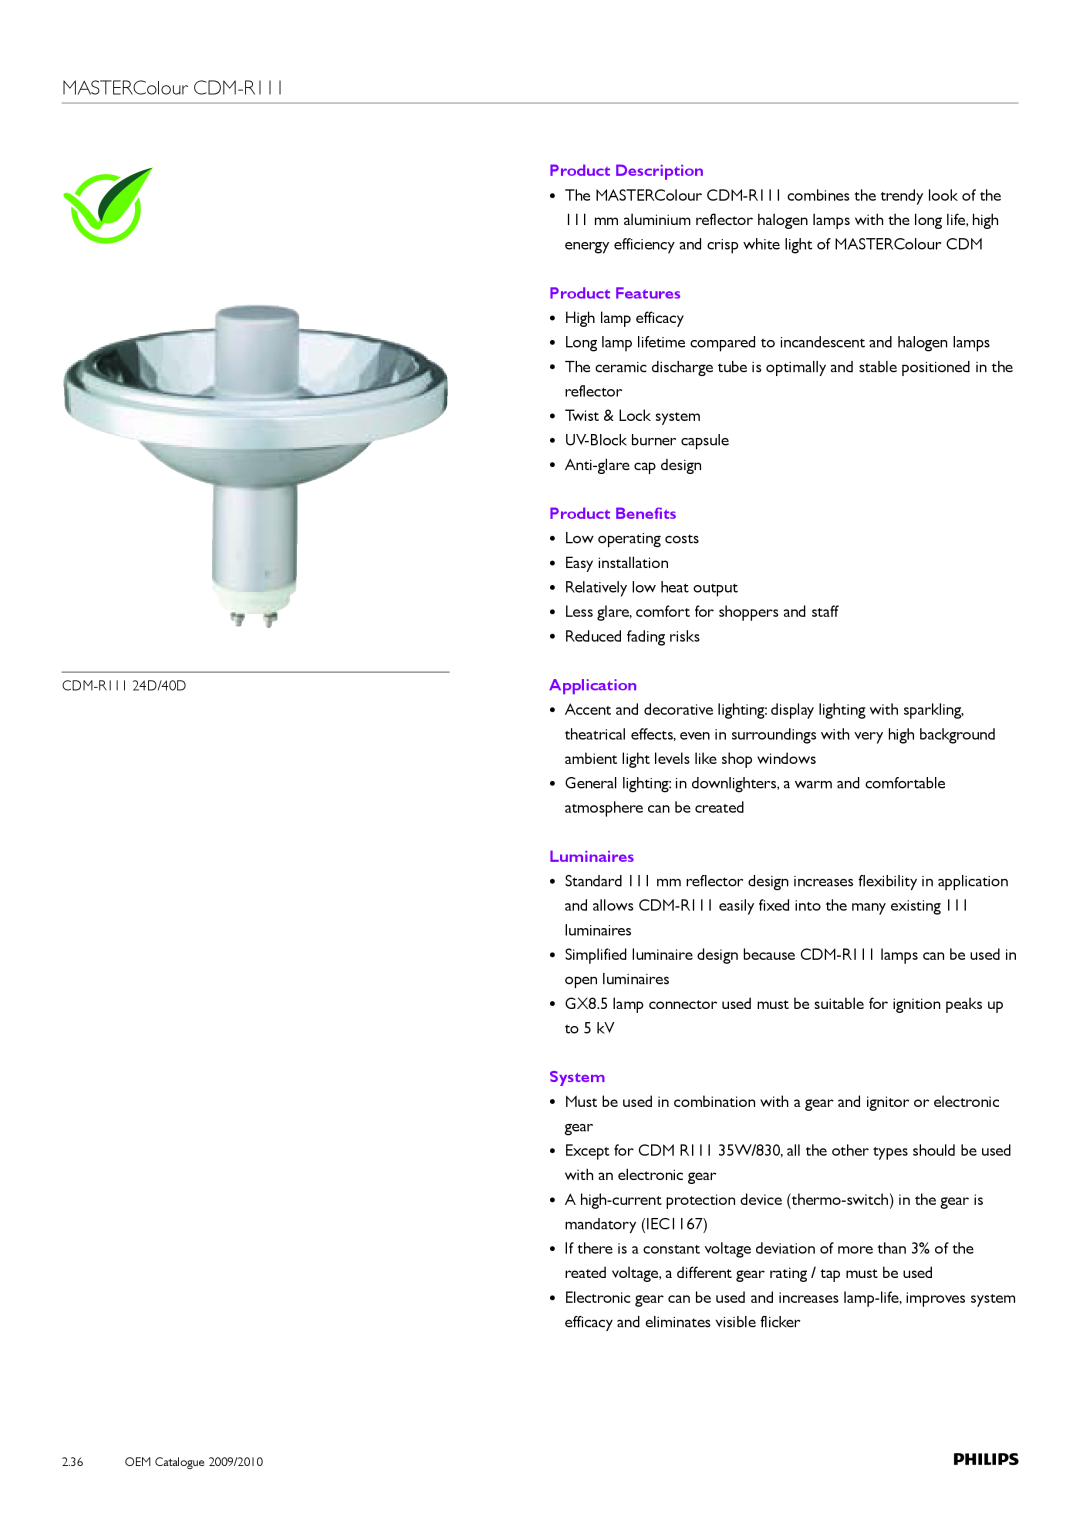 Philips Compact HID Lamp and Gear MASTERColour CDM-R111, Product Description, Product Benefits, Application, Luminaires 